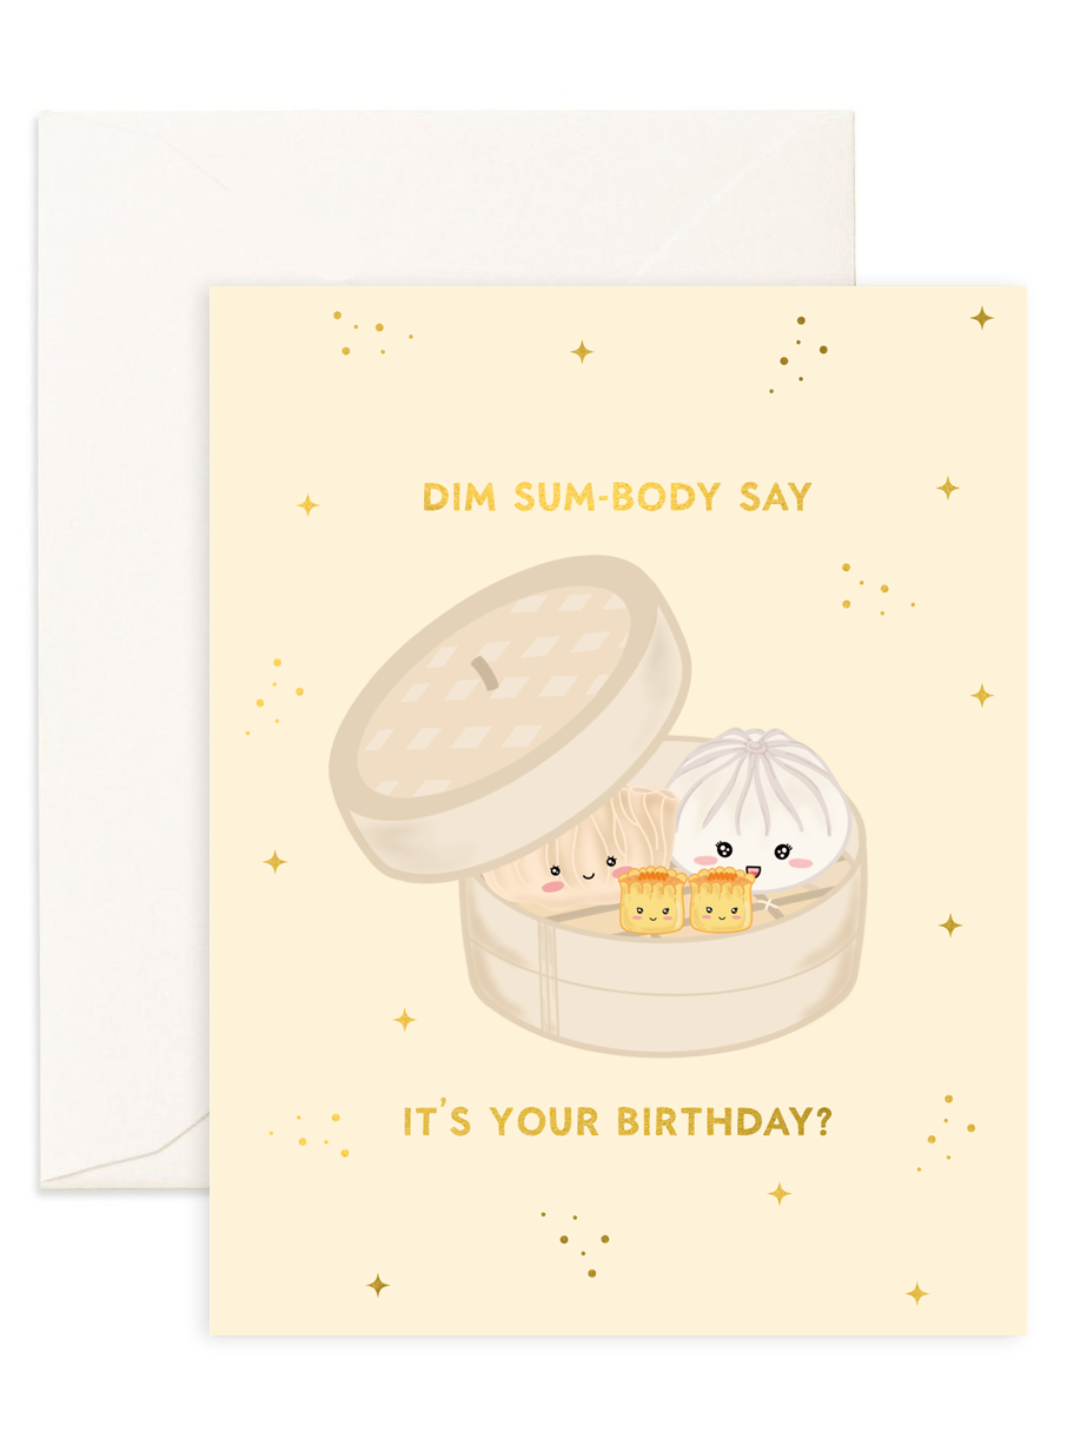 Dim Sum-Body Birthday Card